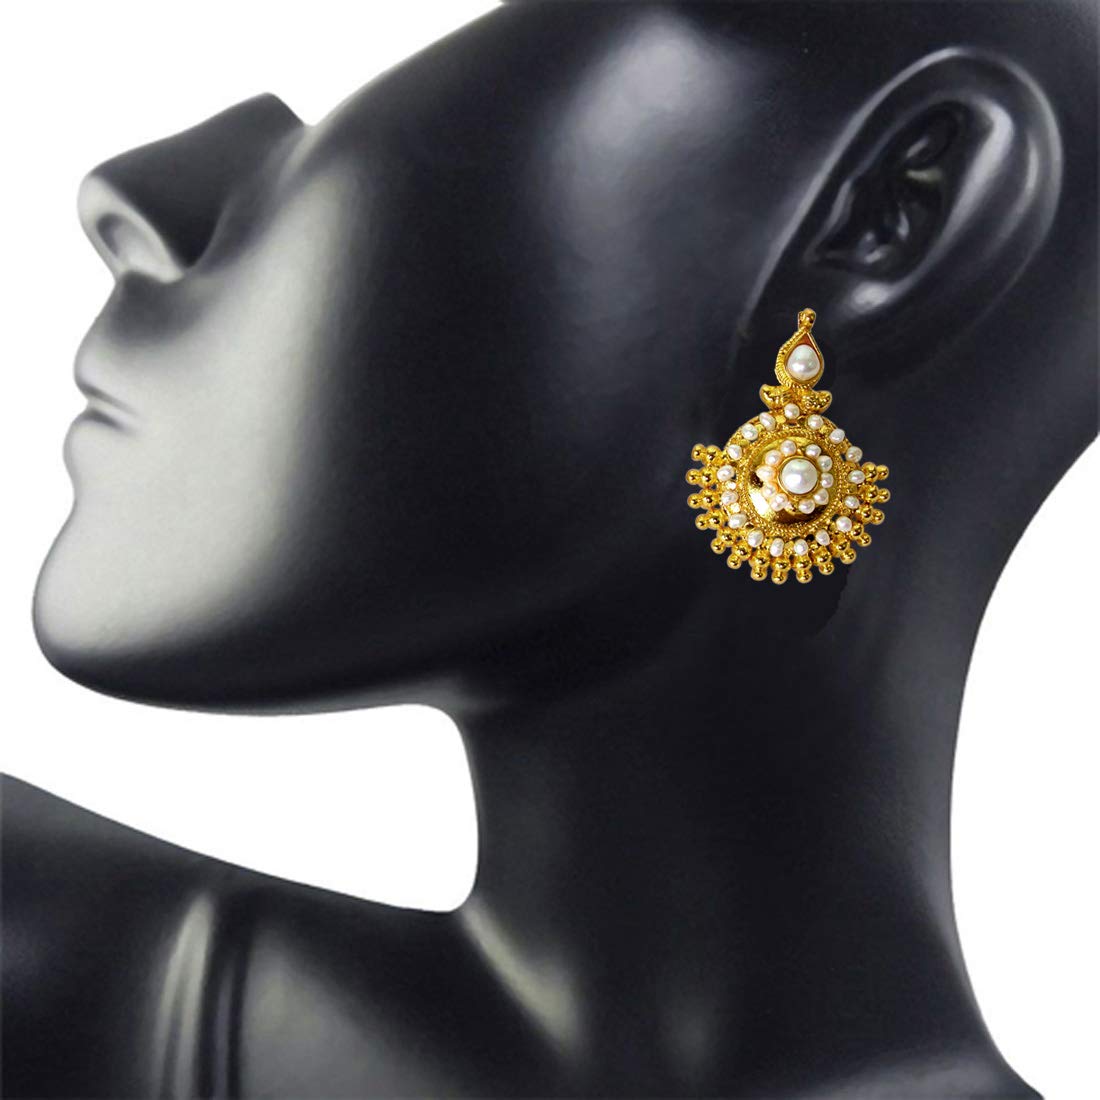 Vibrant Beauty - Freshwater Pearl & Gold Plated Temple Design Earrings for Women (SE27)